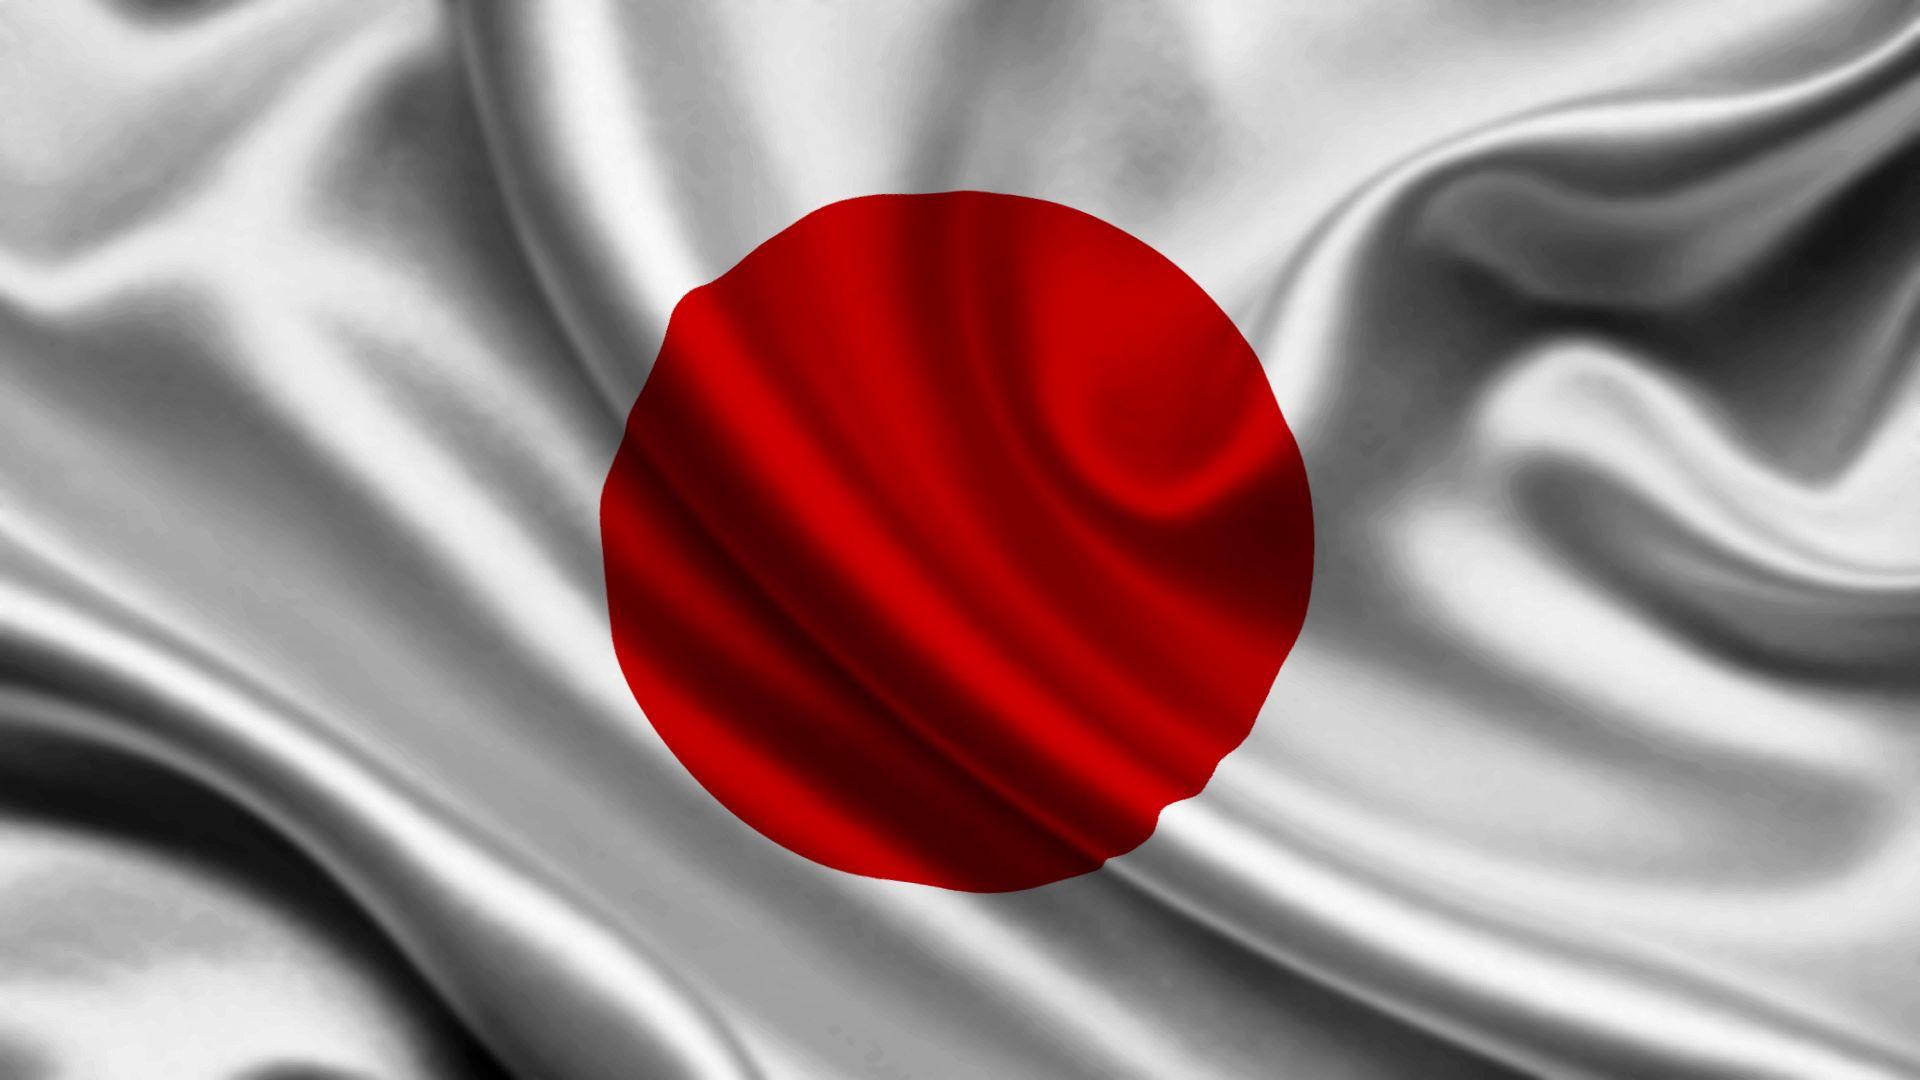 Misc Flag Of Japan wallpaper (Desktop, Phone, Tablet)